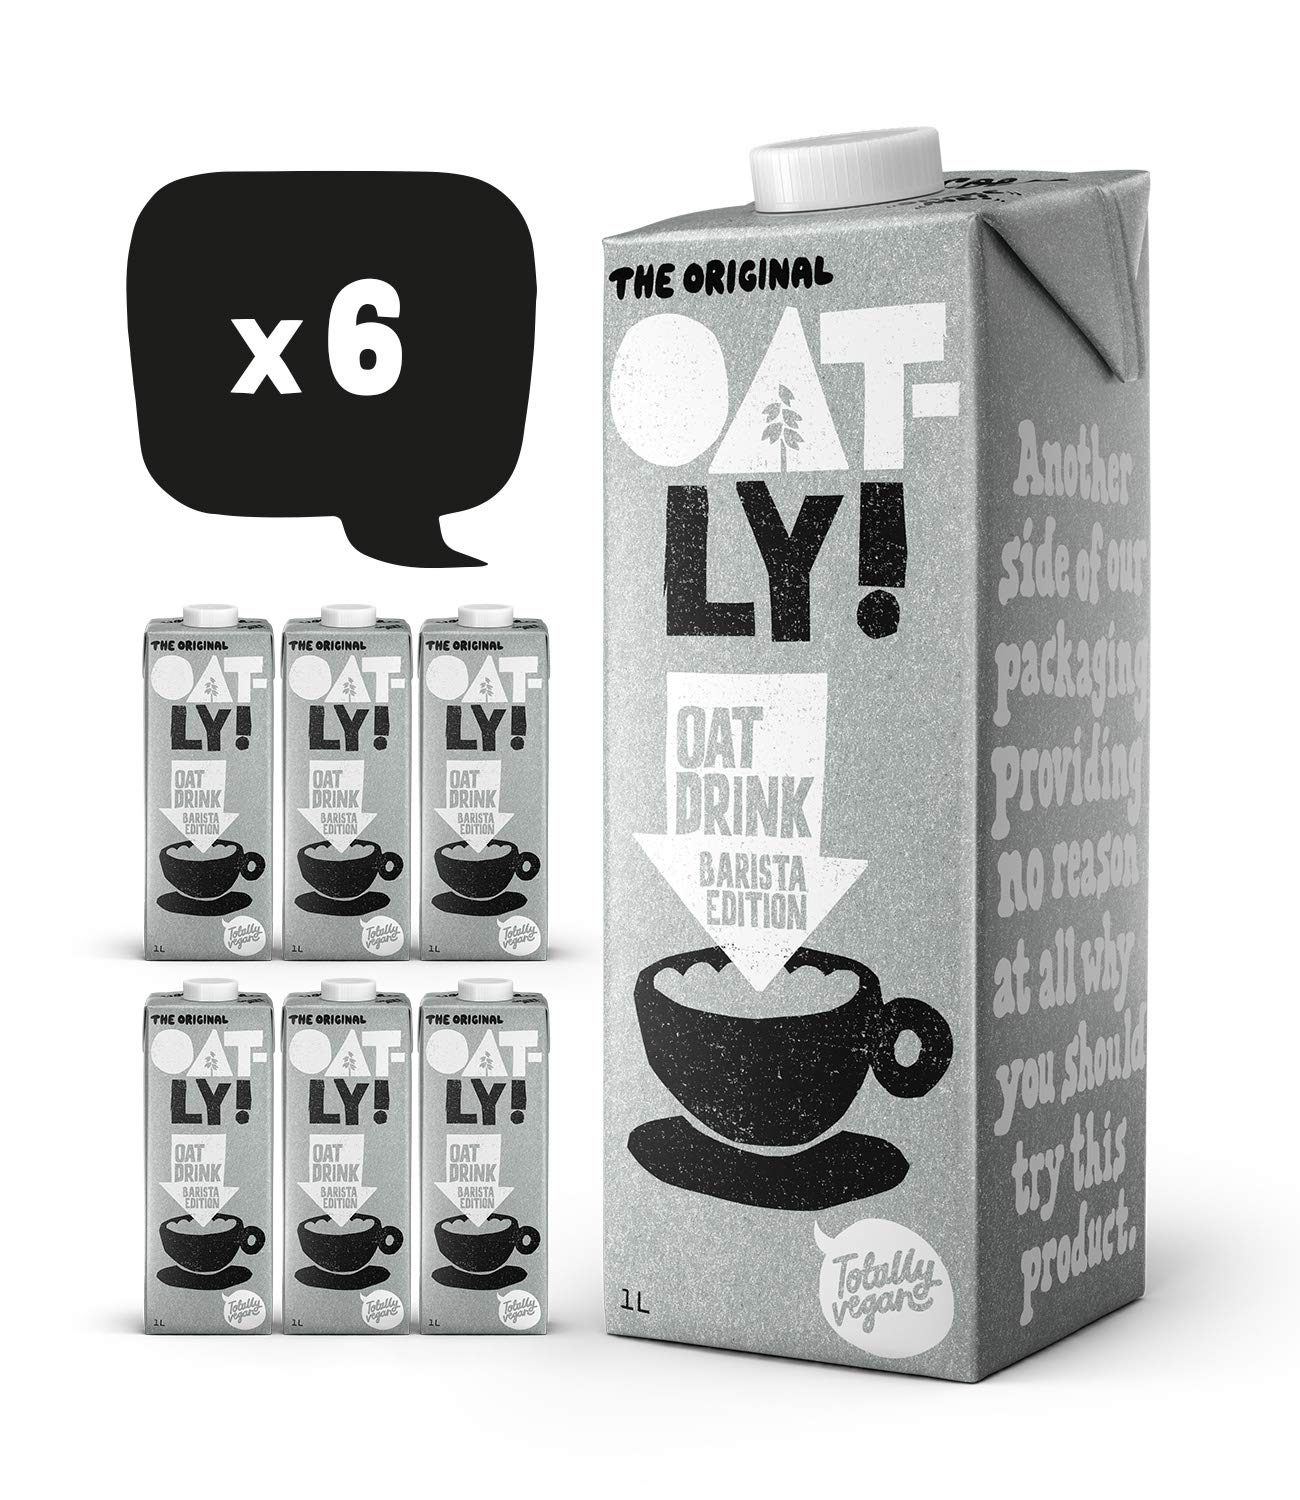 OATLY! Barista Foam-Able Oat Drink, 1Ltr - Pack of 6, Vegan, Dairy Free